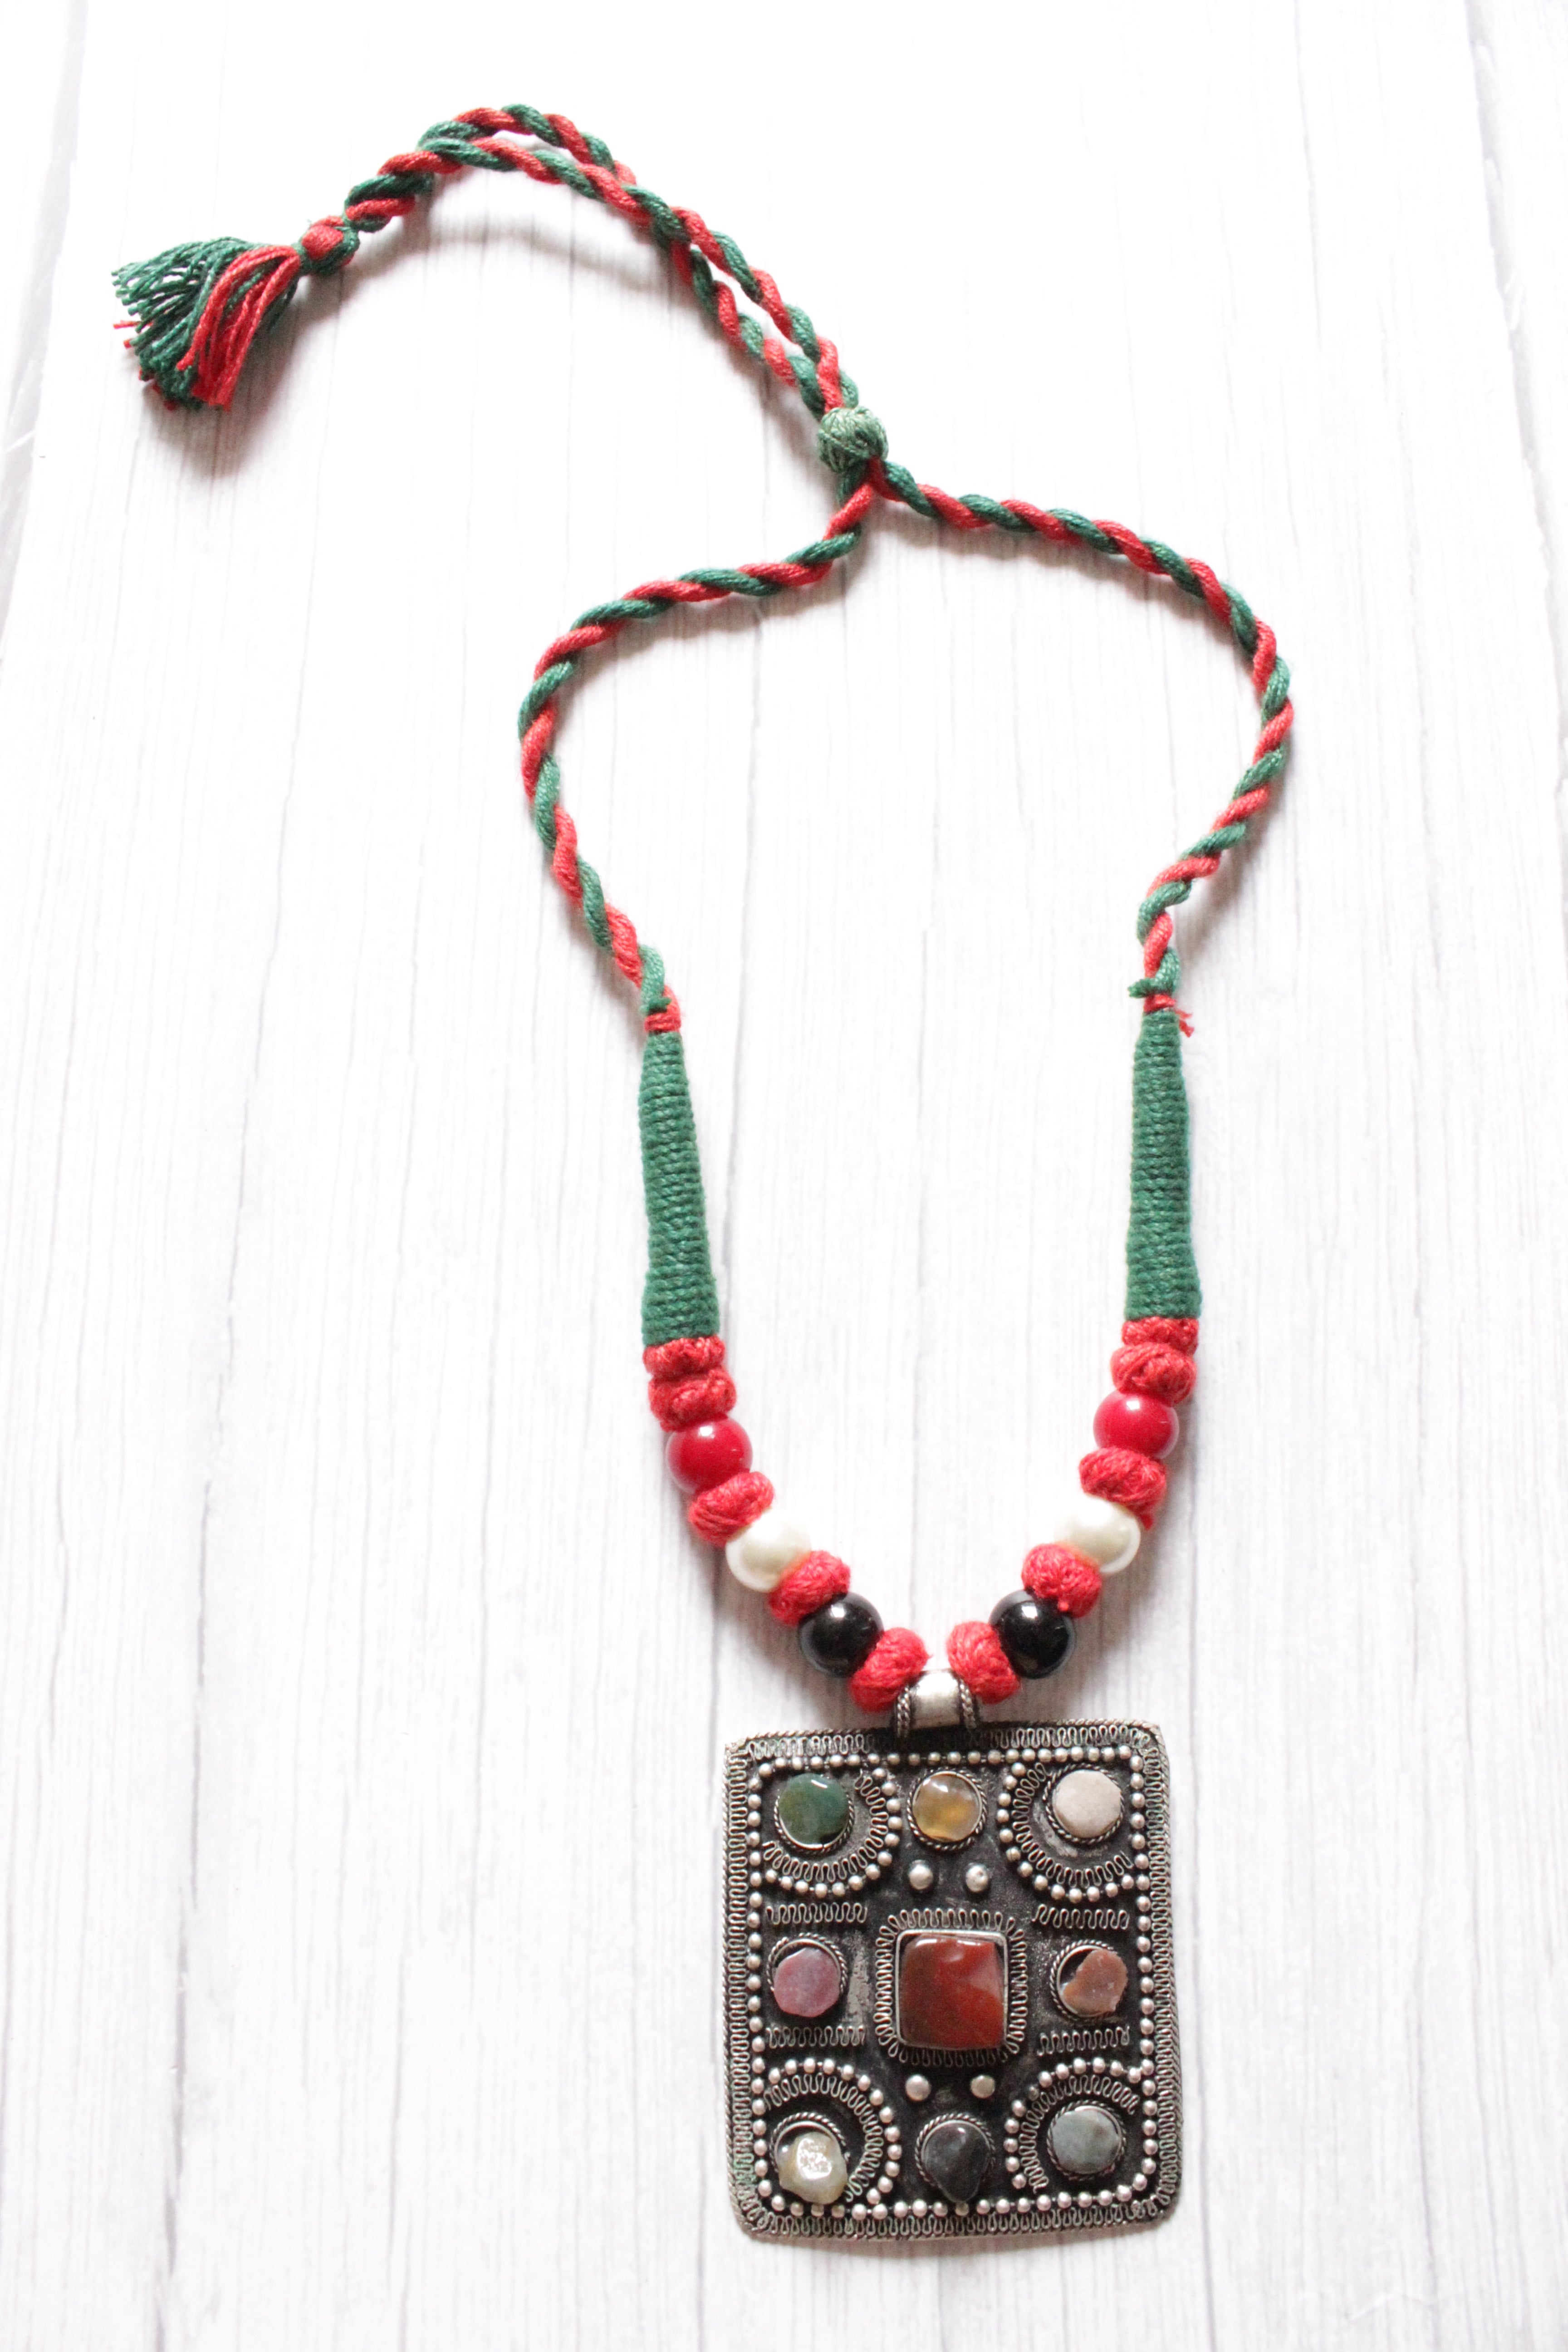 Natural Stones Embedded Oxidised Finish Afghani Pendant Braided Threads Necklace Set